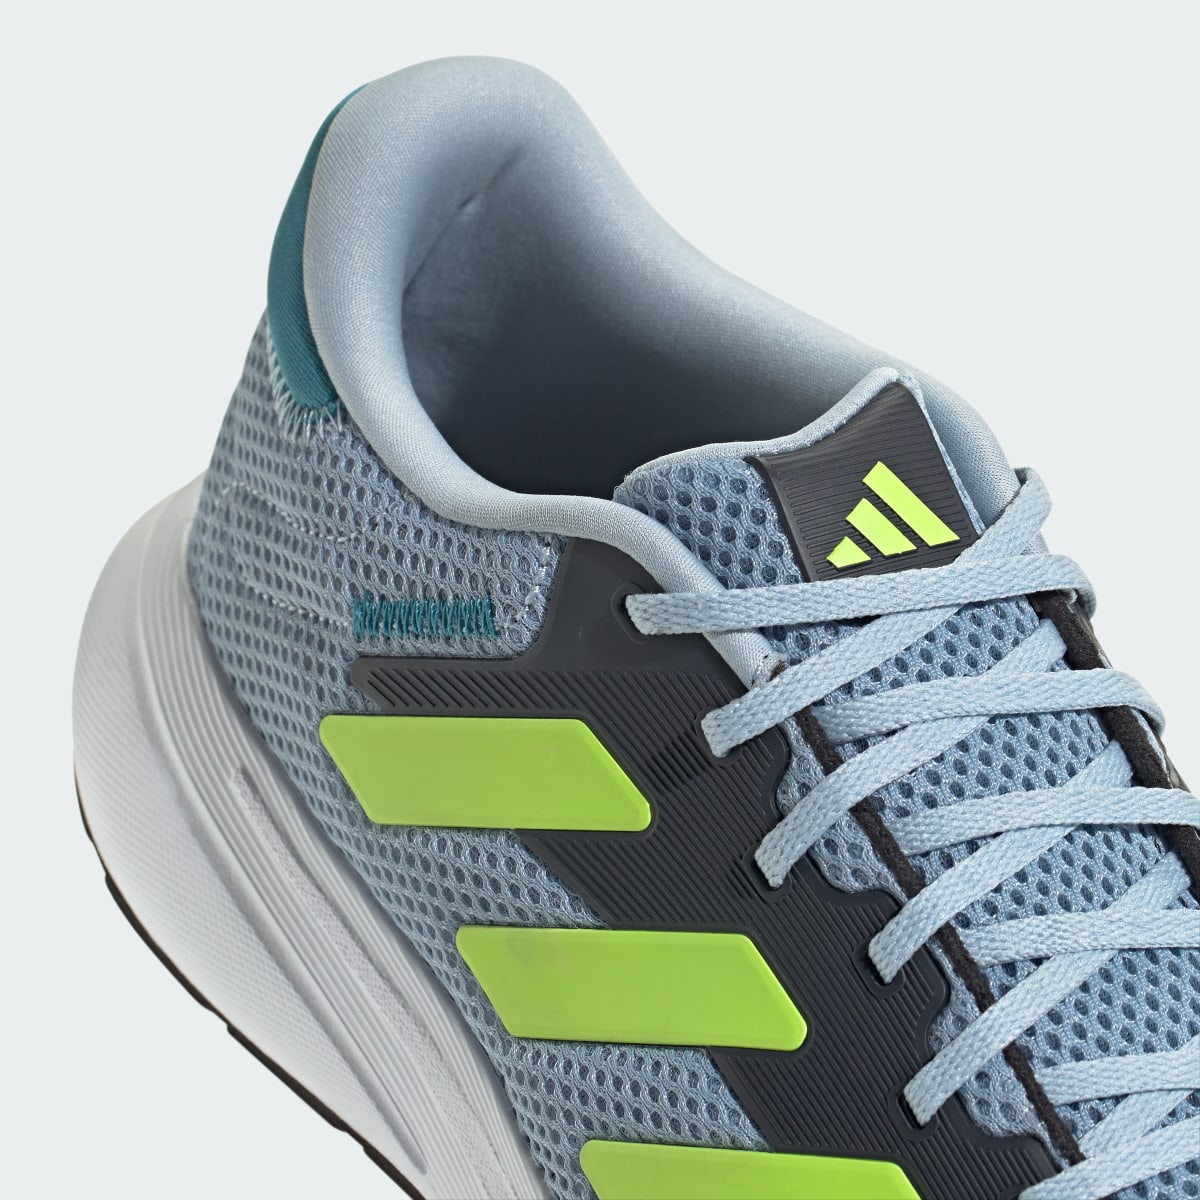 Adidas Response Runner Shoes. 10